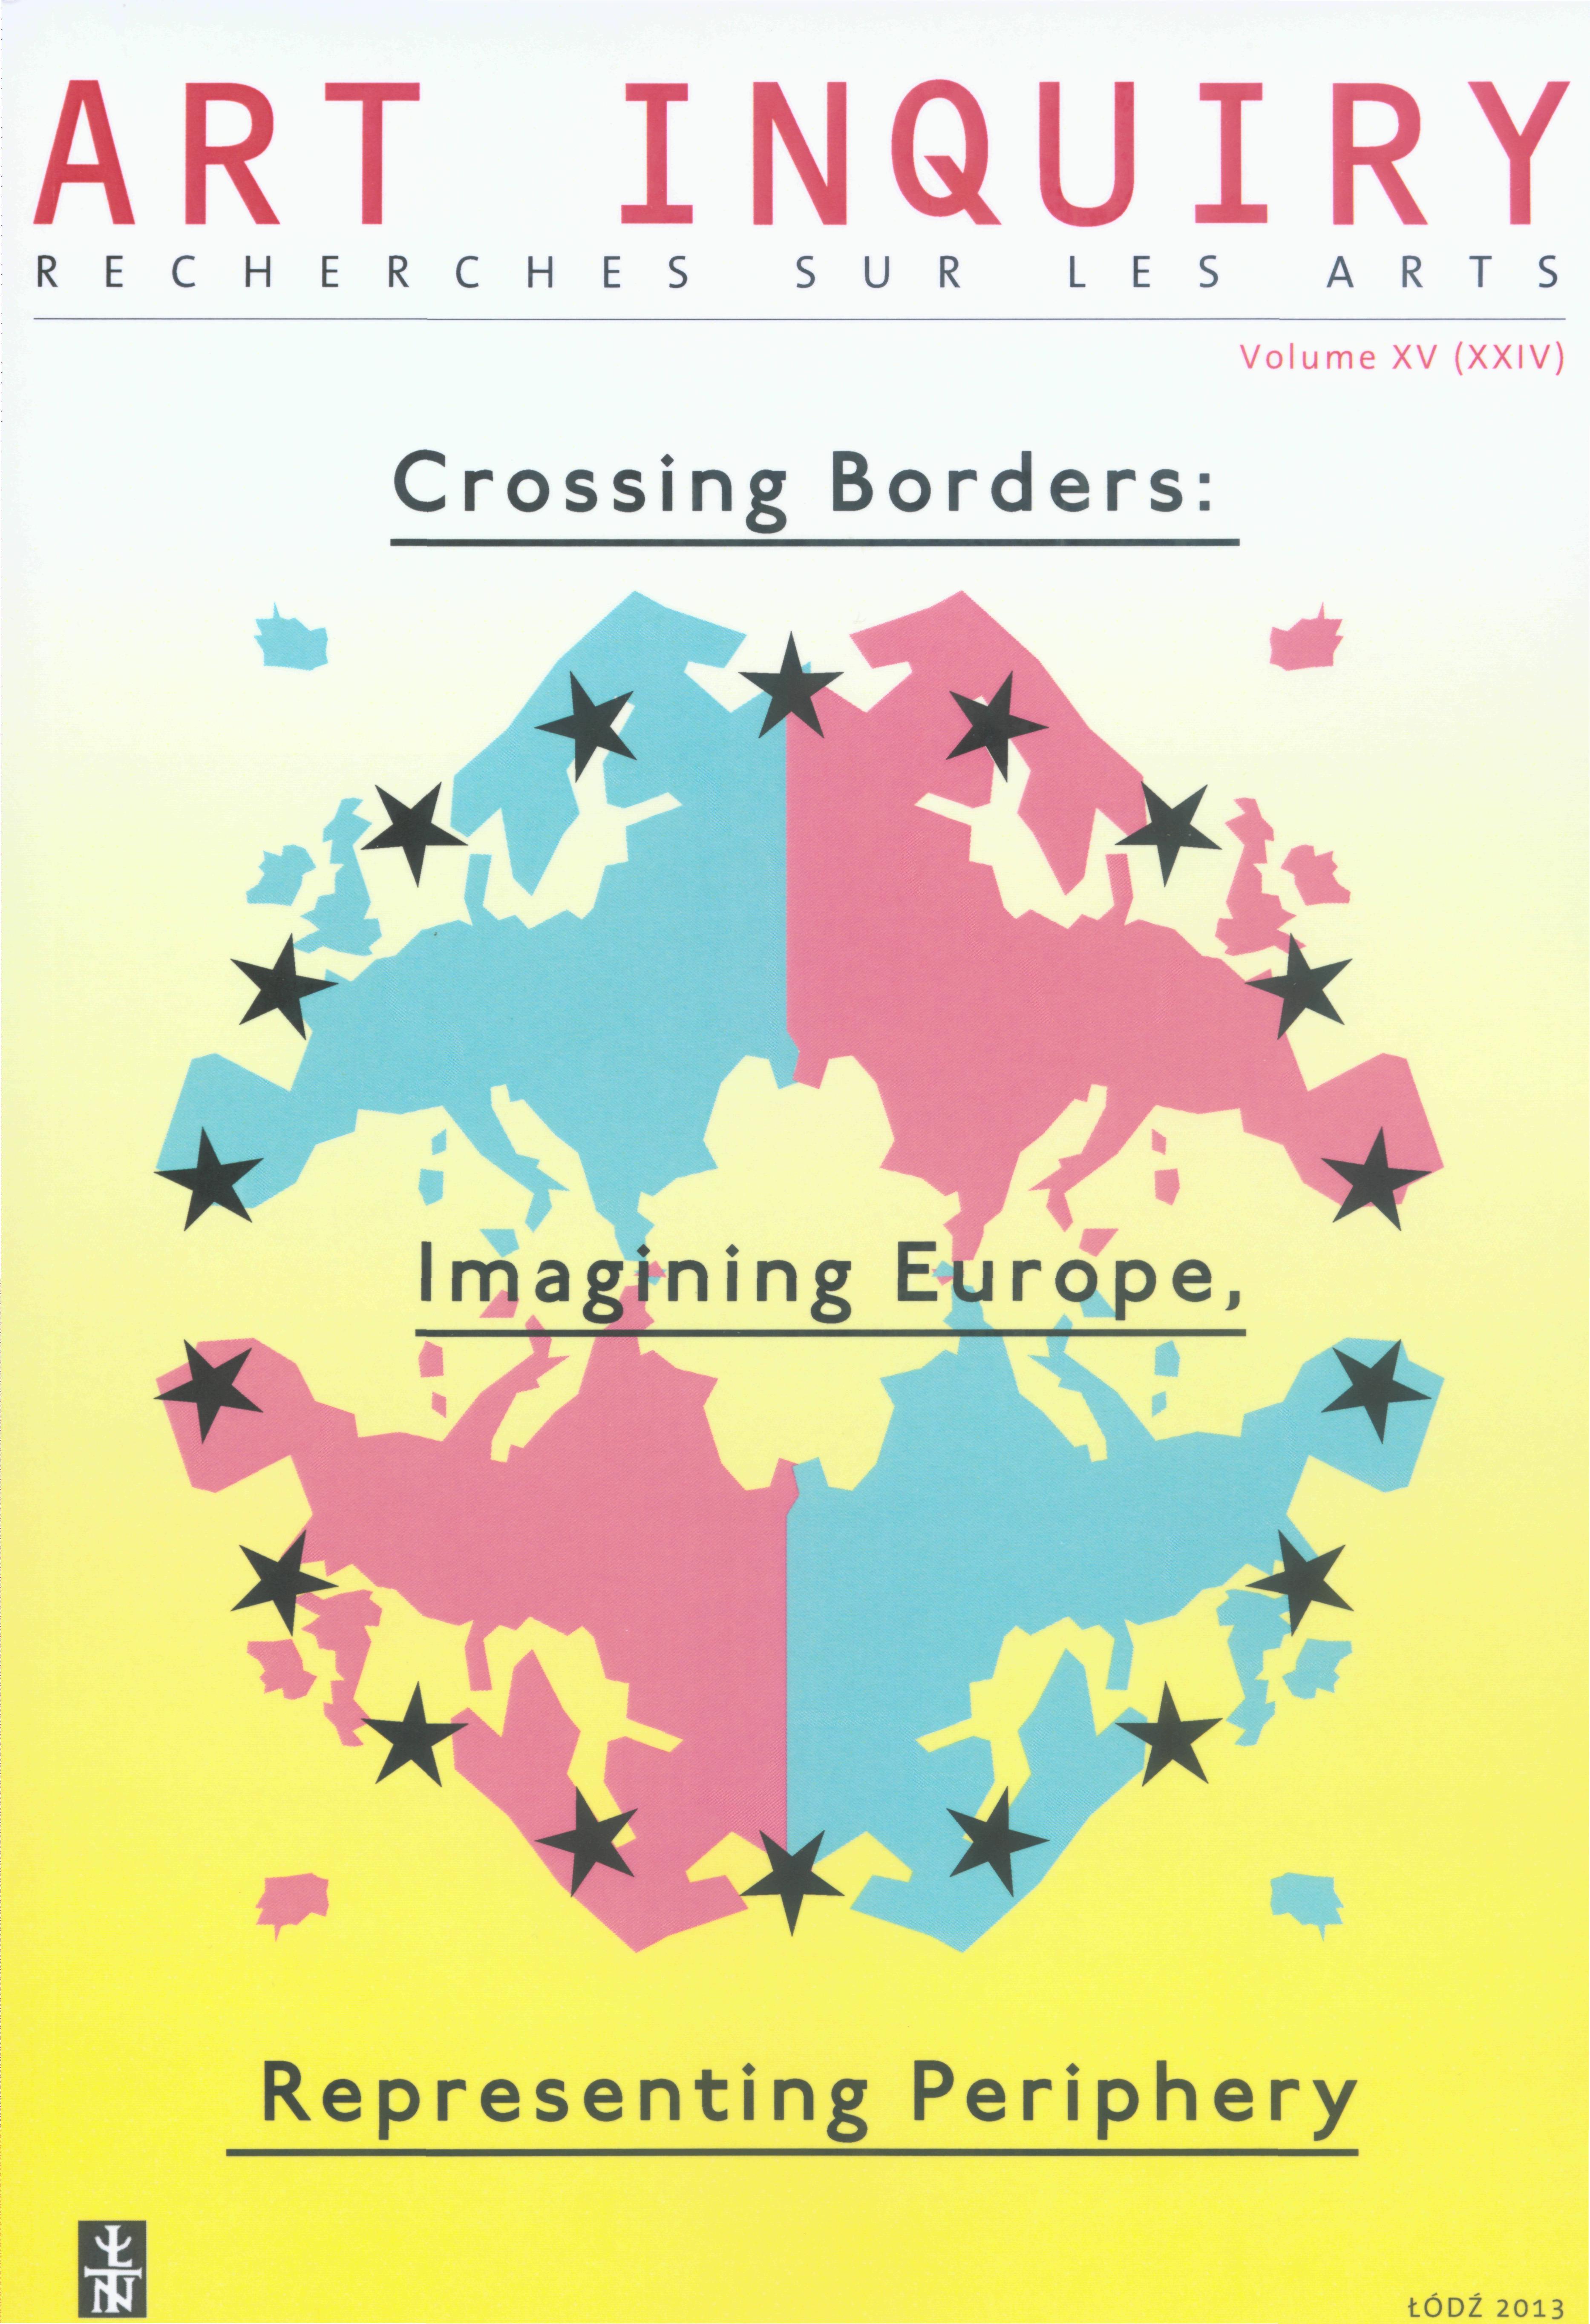 					View Vol. 15 (2013): Crossing borders: imagining Europe, representing periphery
				